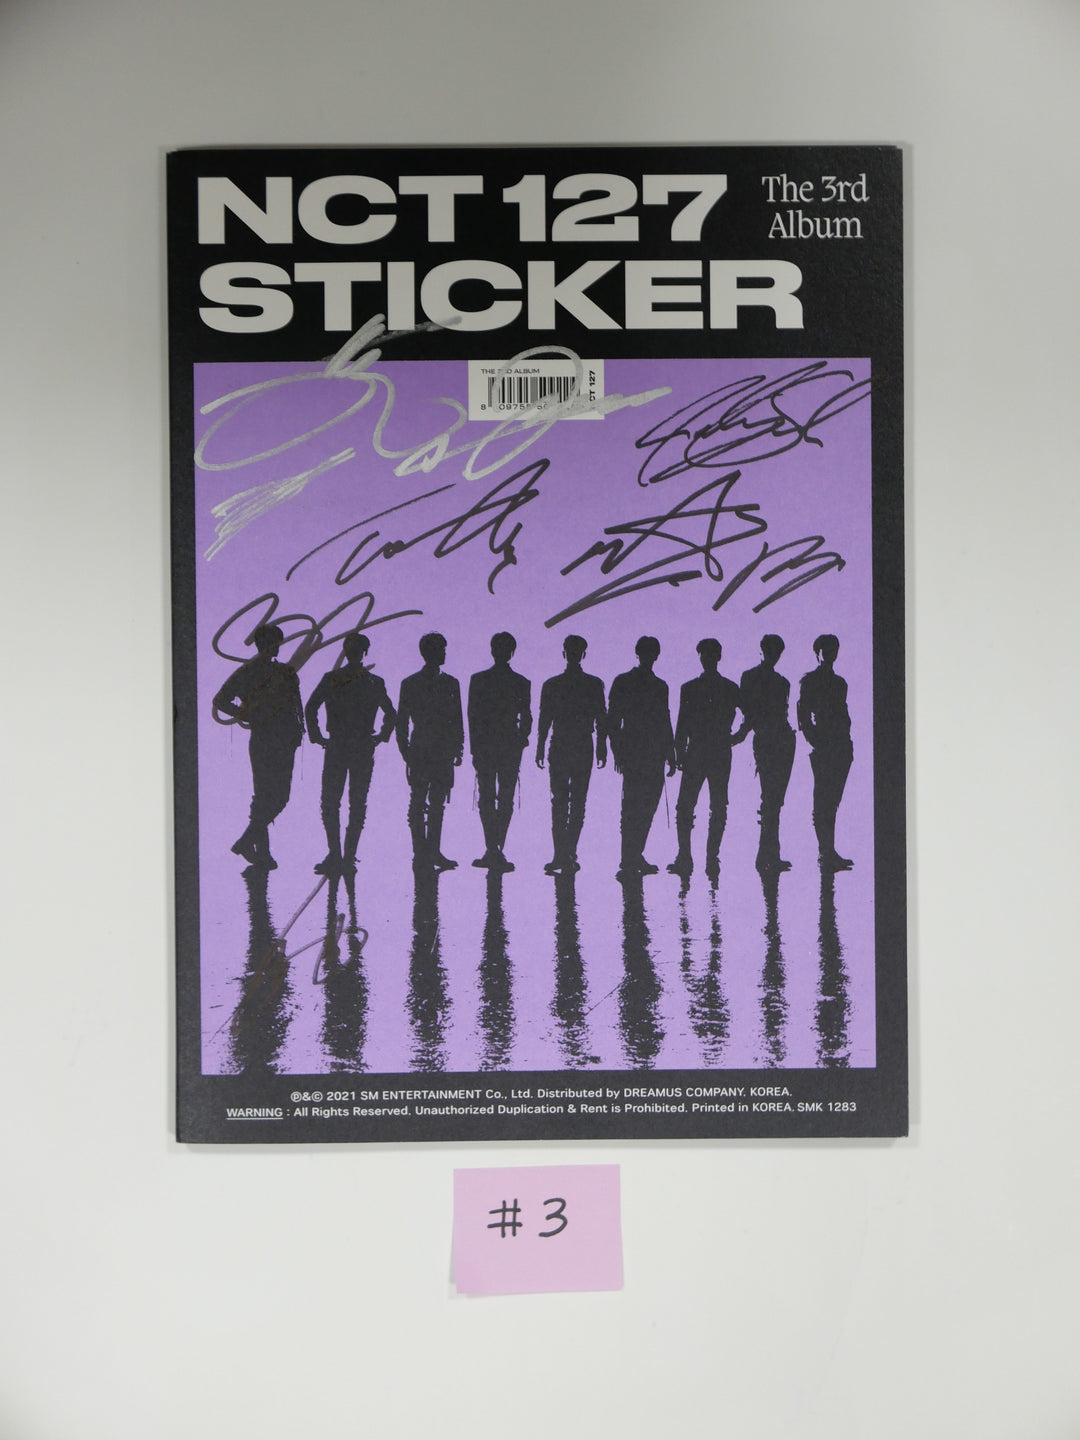 NCT 127 "Sticker" 3rd Album - Hand Autographed(Signed) Promo Album